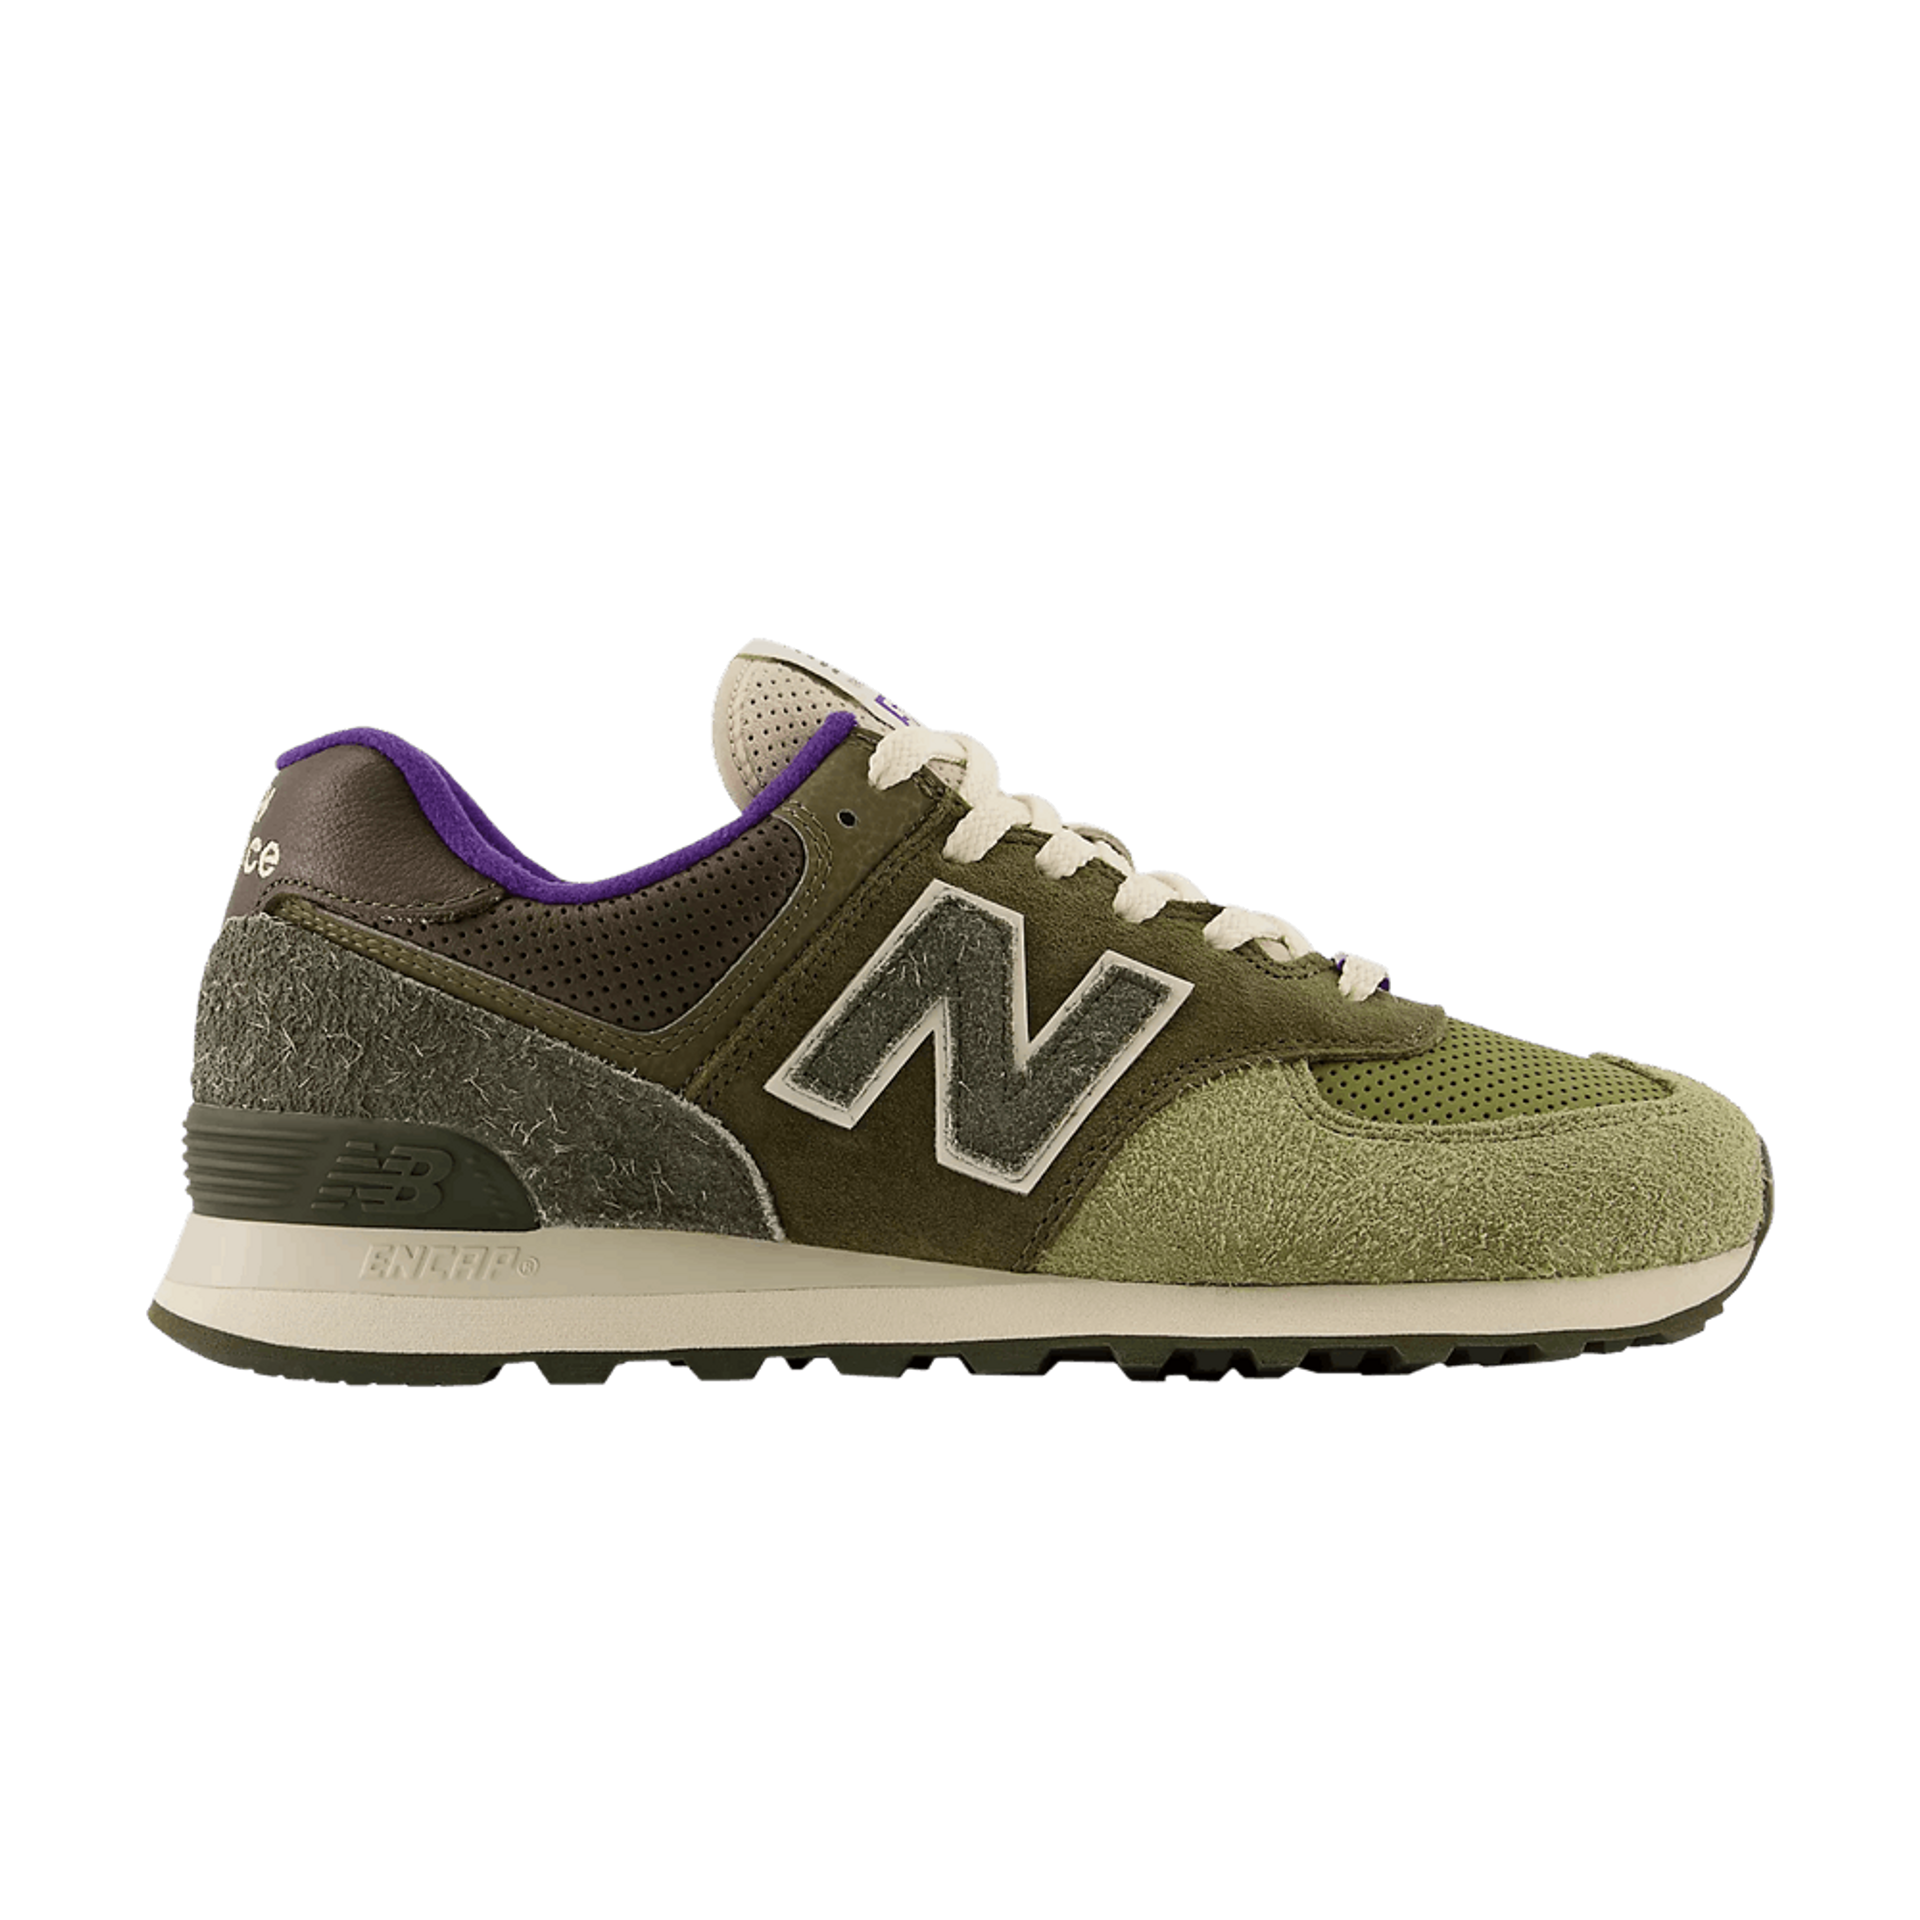 New Balance Sneakersnstuff x 574 'Nature'